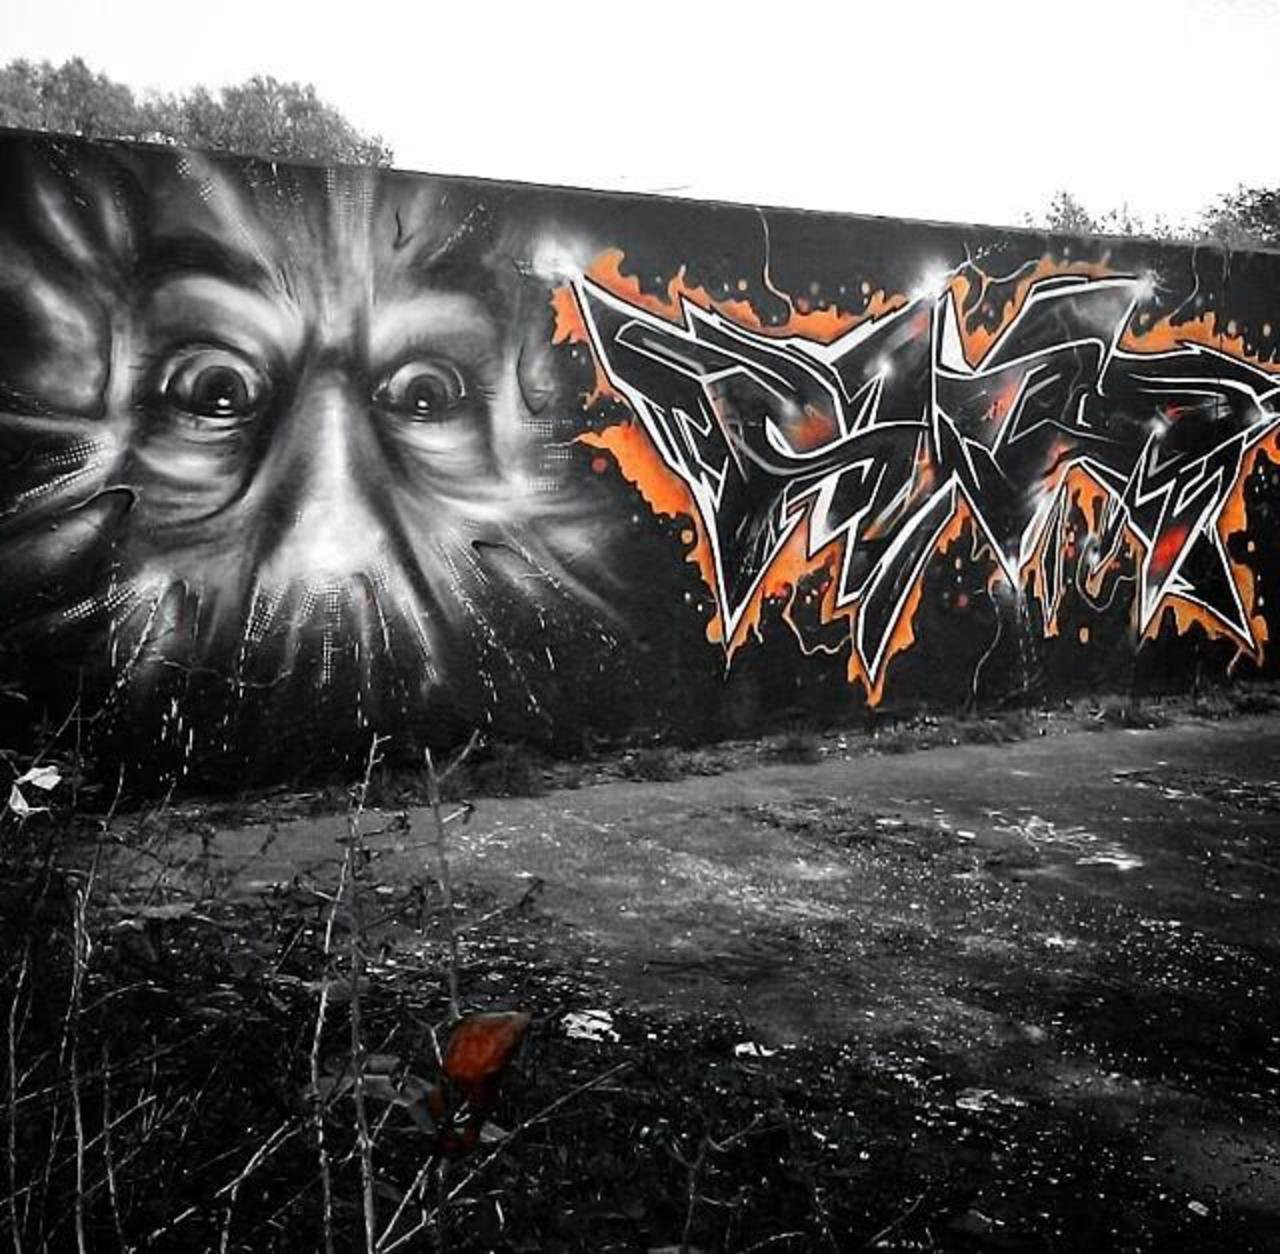 Graffiti & Street Art colab between Trans1graffiti & Swae

#art #graffiti #streetart http://t.co/70NSsO1AvT